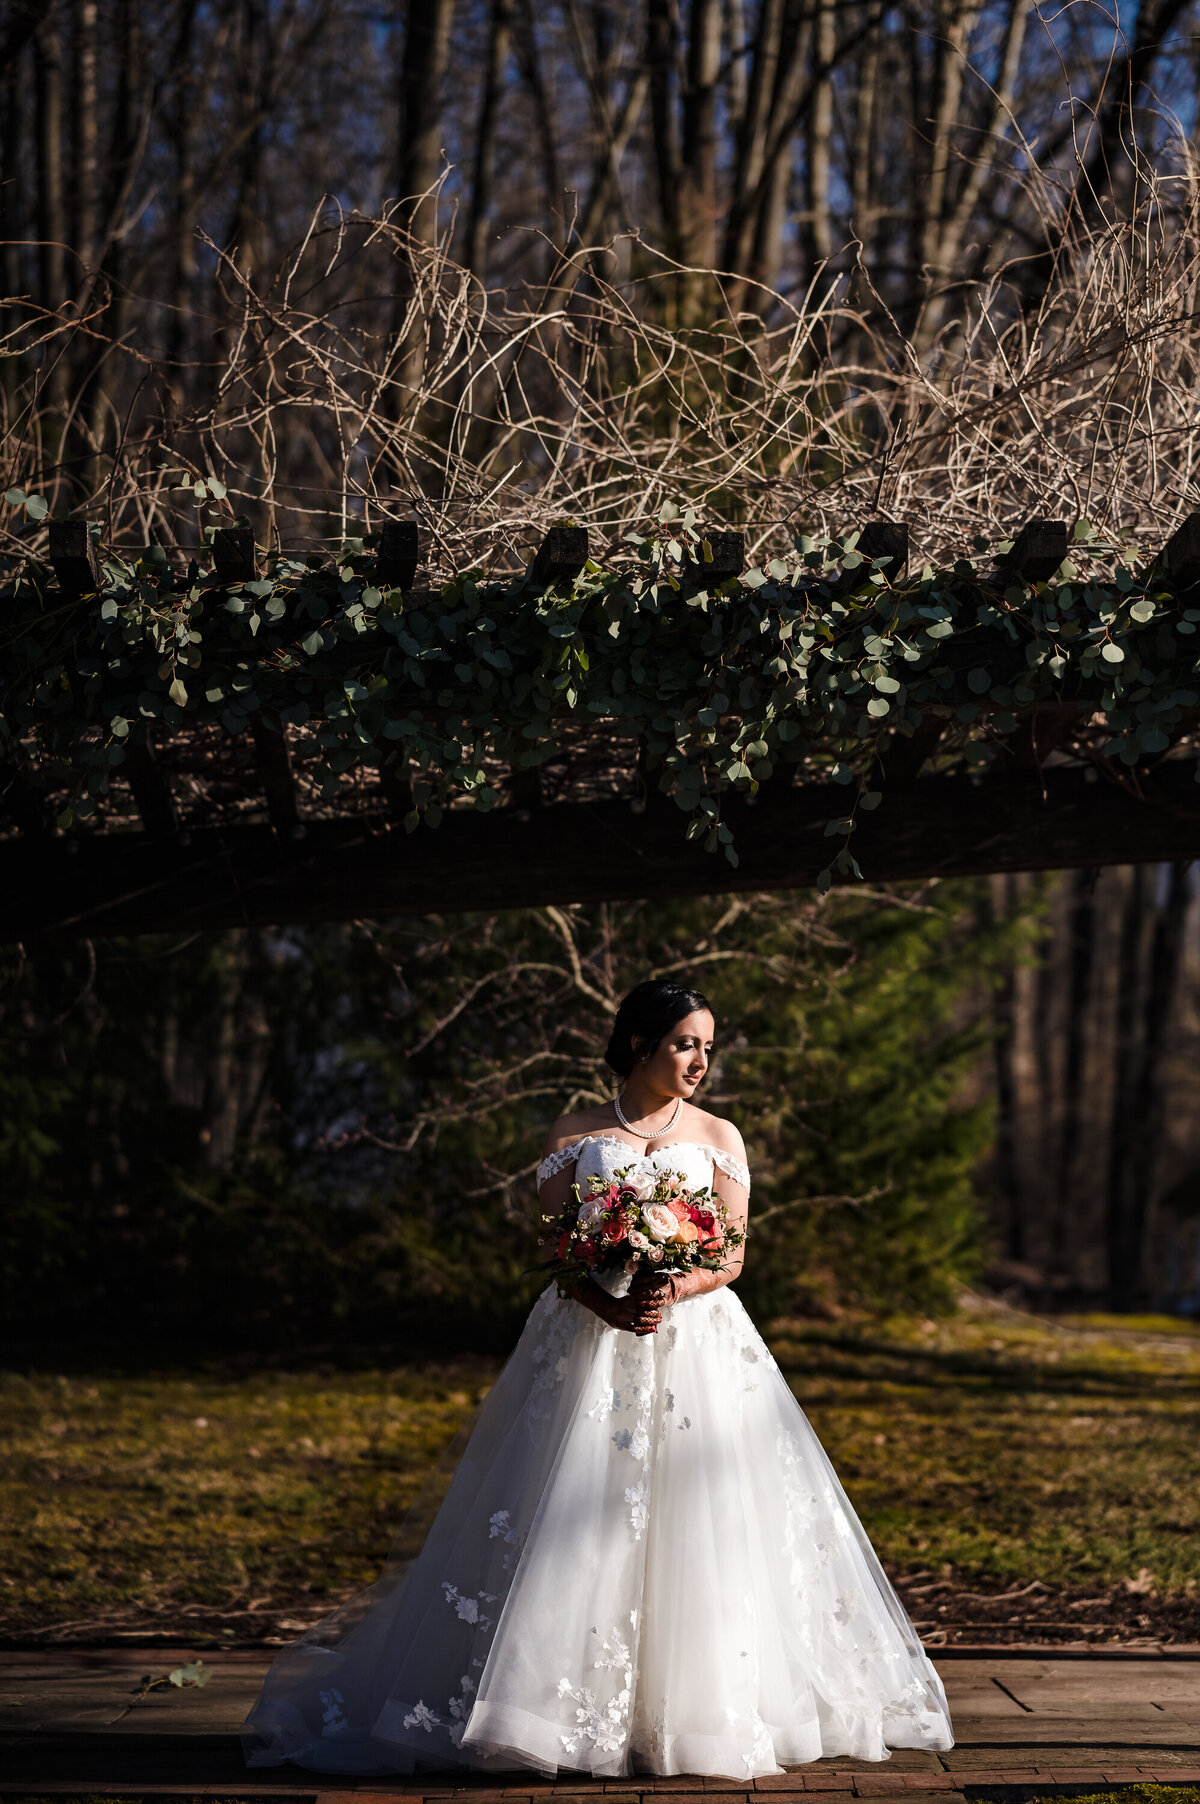 Timeless wedding photography for your Philadelphia celebration with Ishan Fotografi.